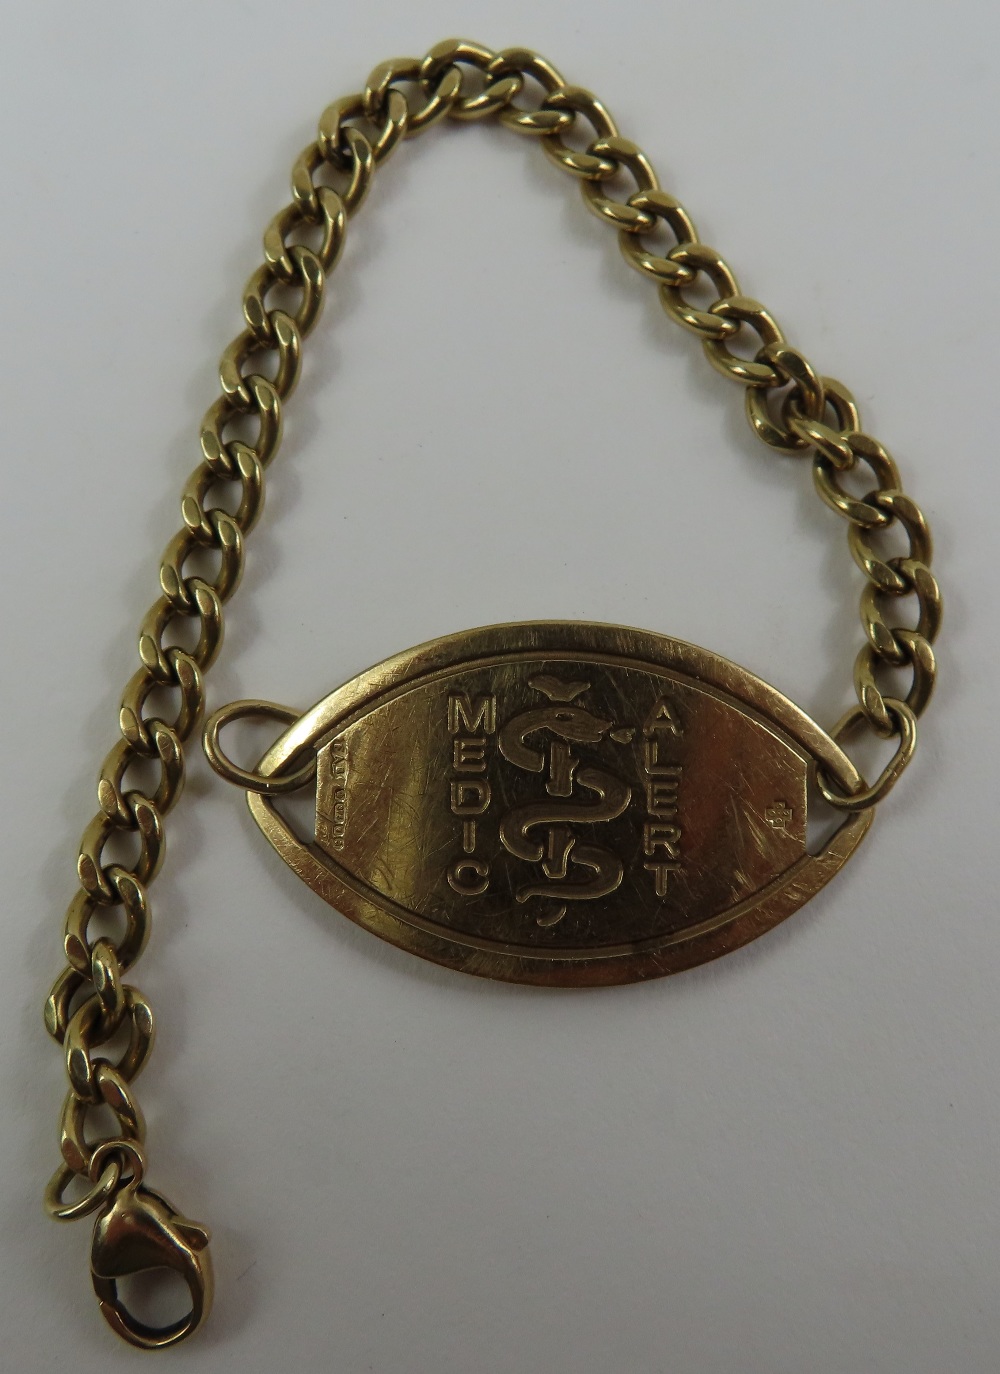 A 9ct gold 'Medic Alert' bracelet, 20cm long, 17.7